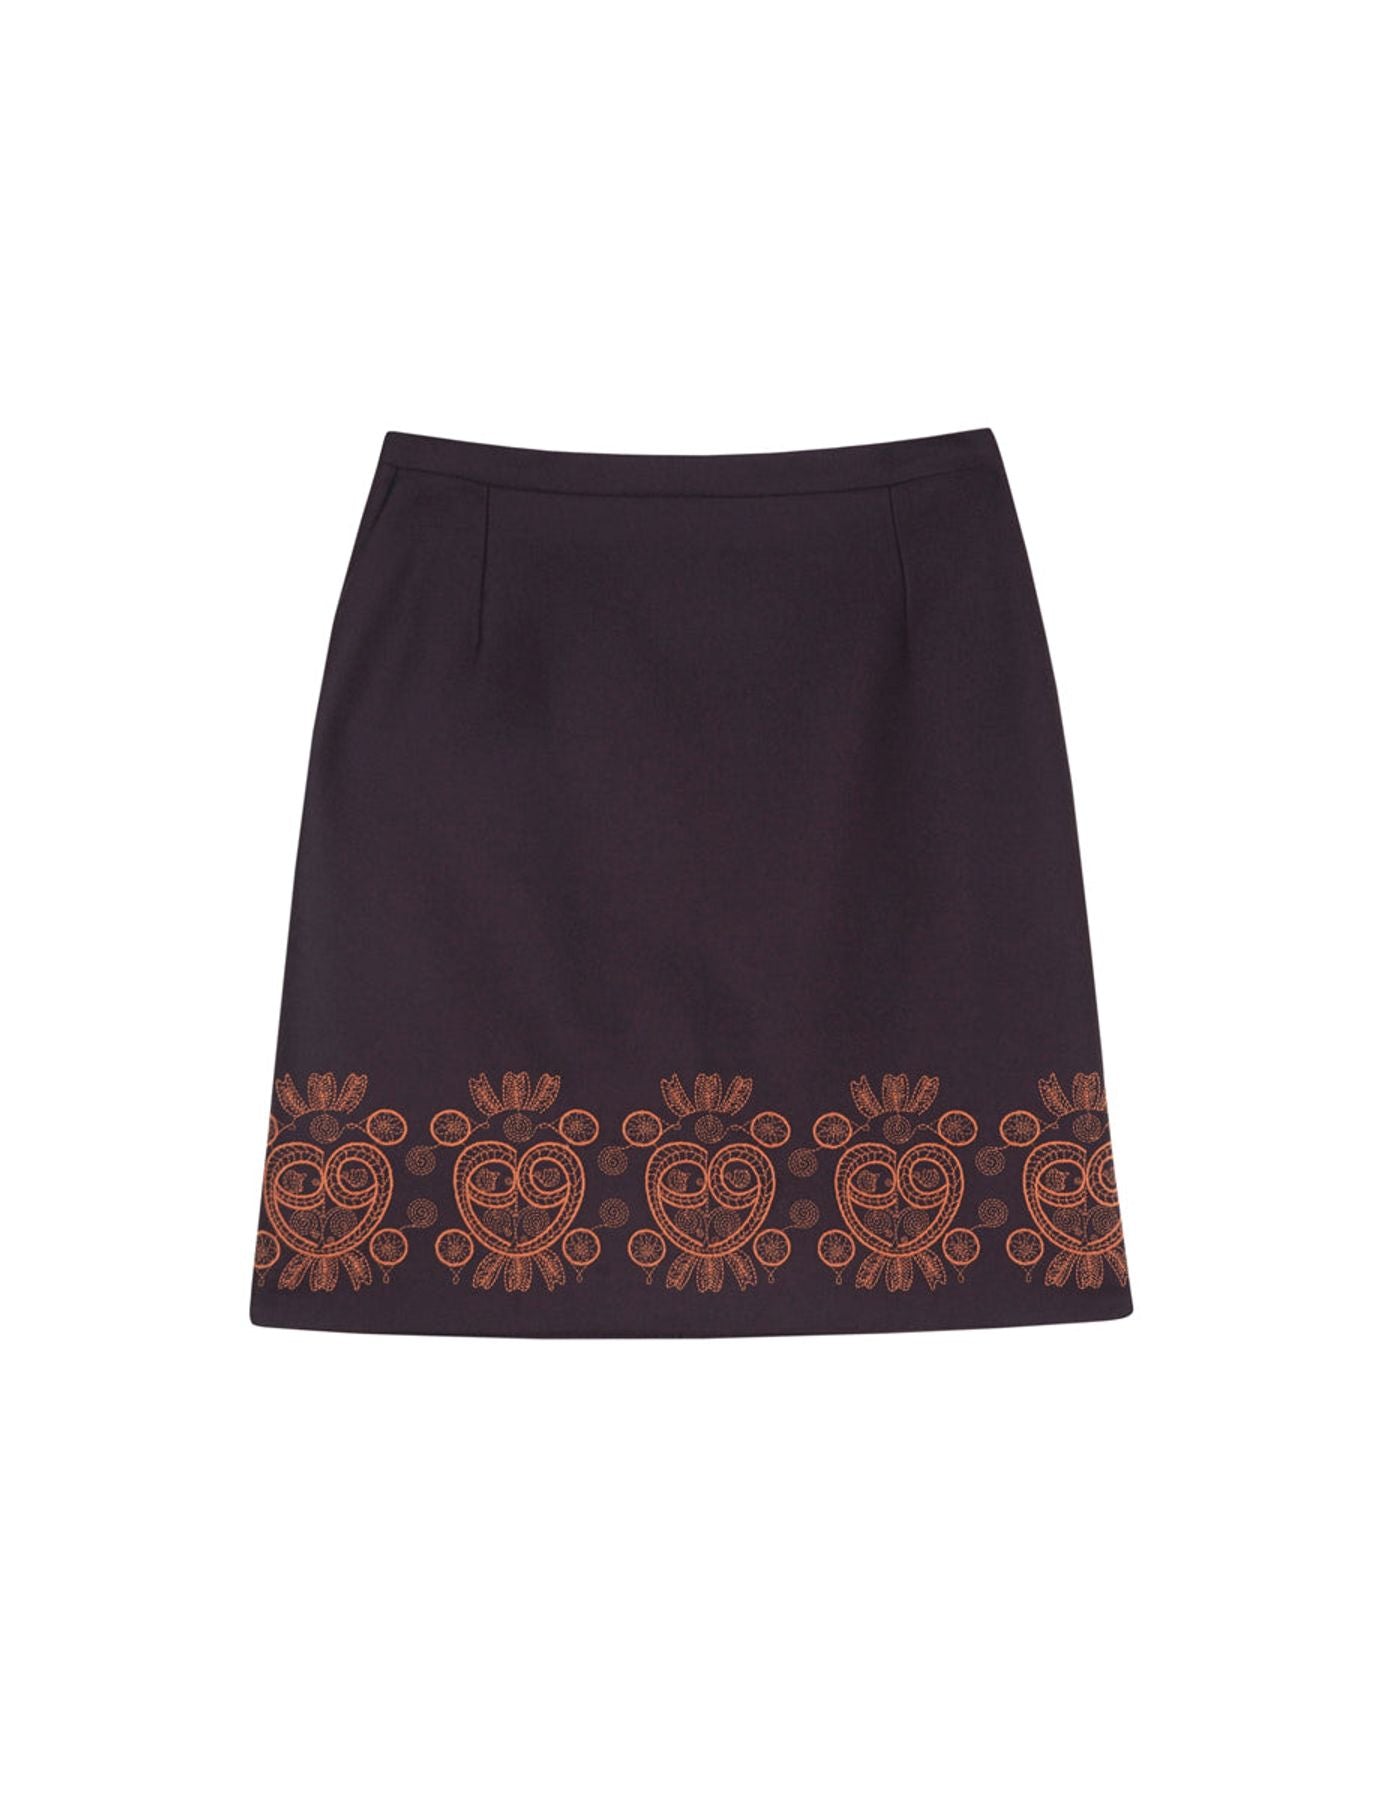 skirt-sophia-in-lain-brown